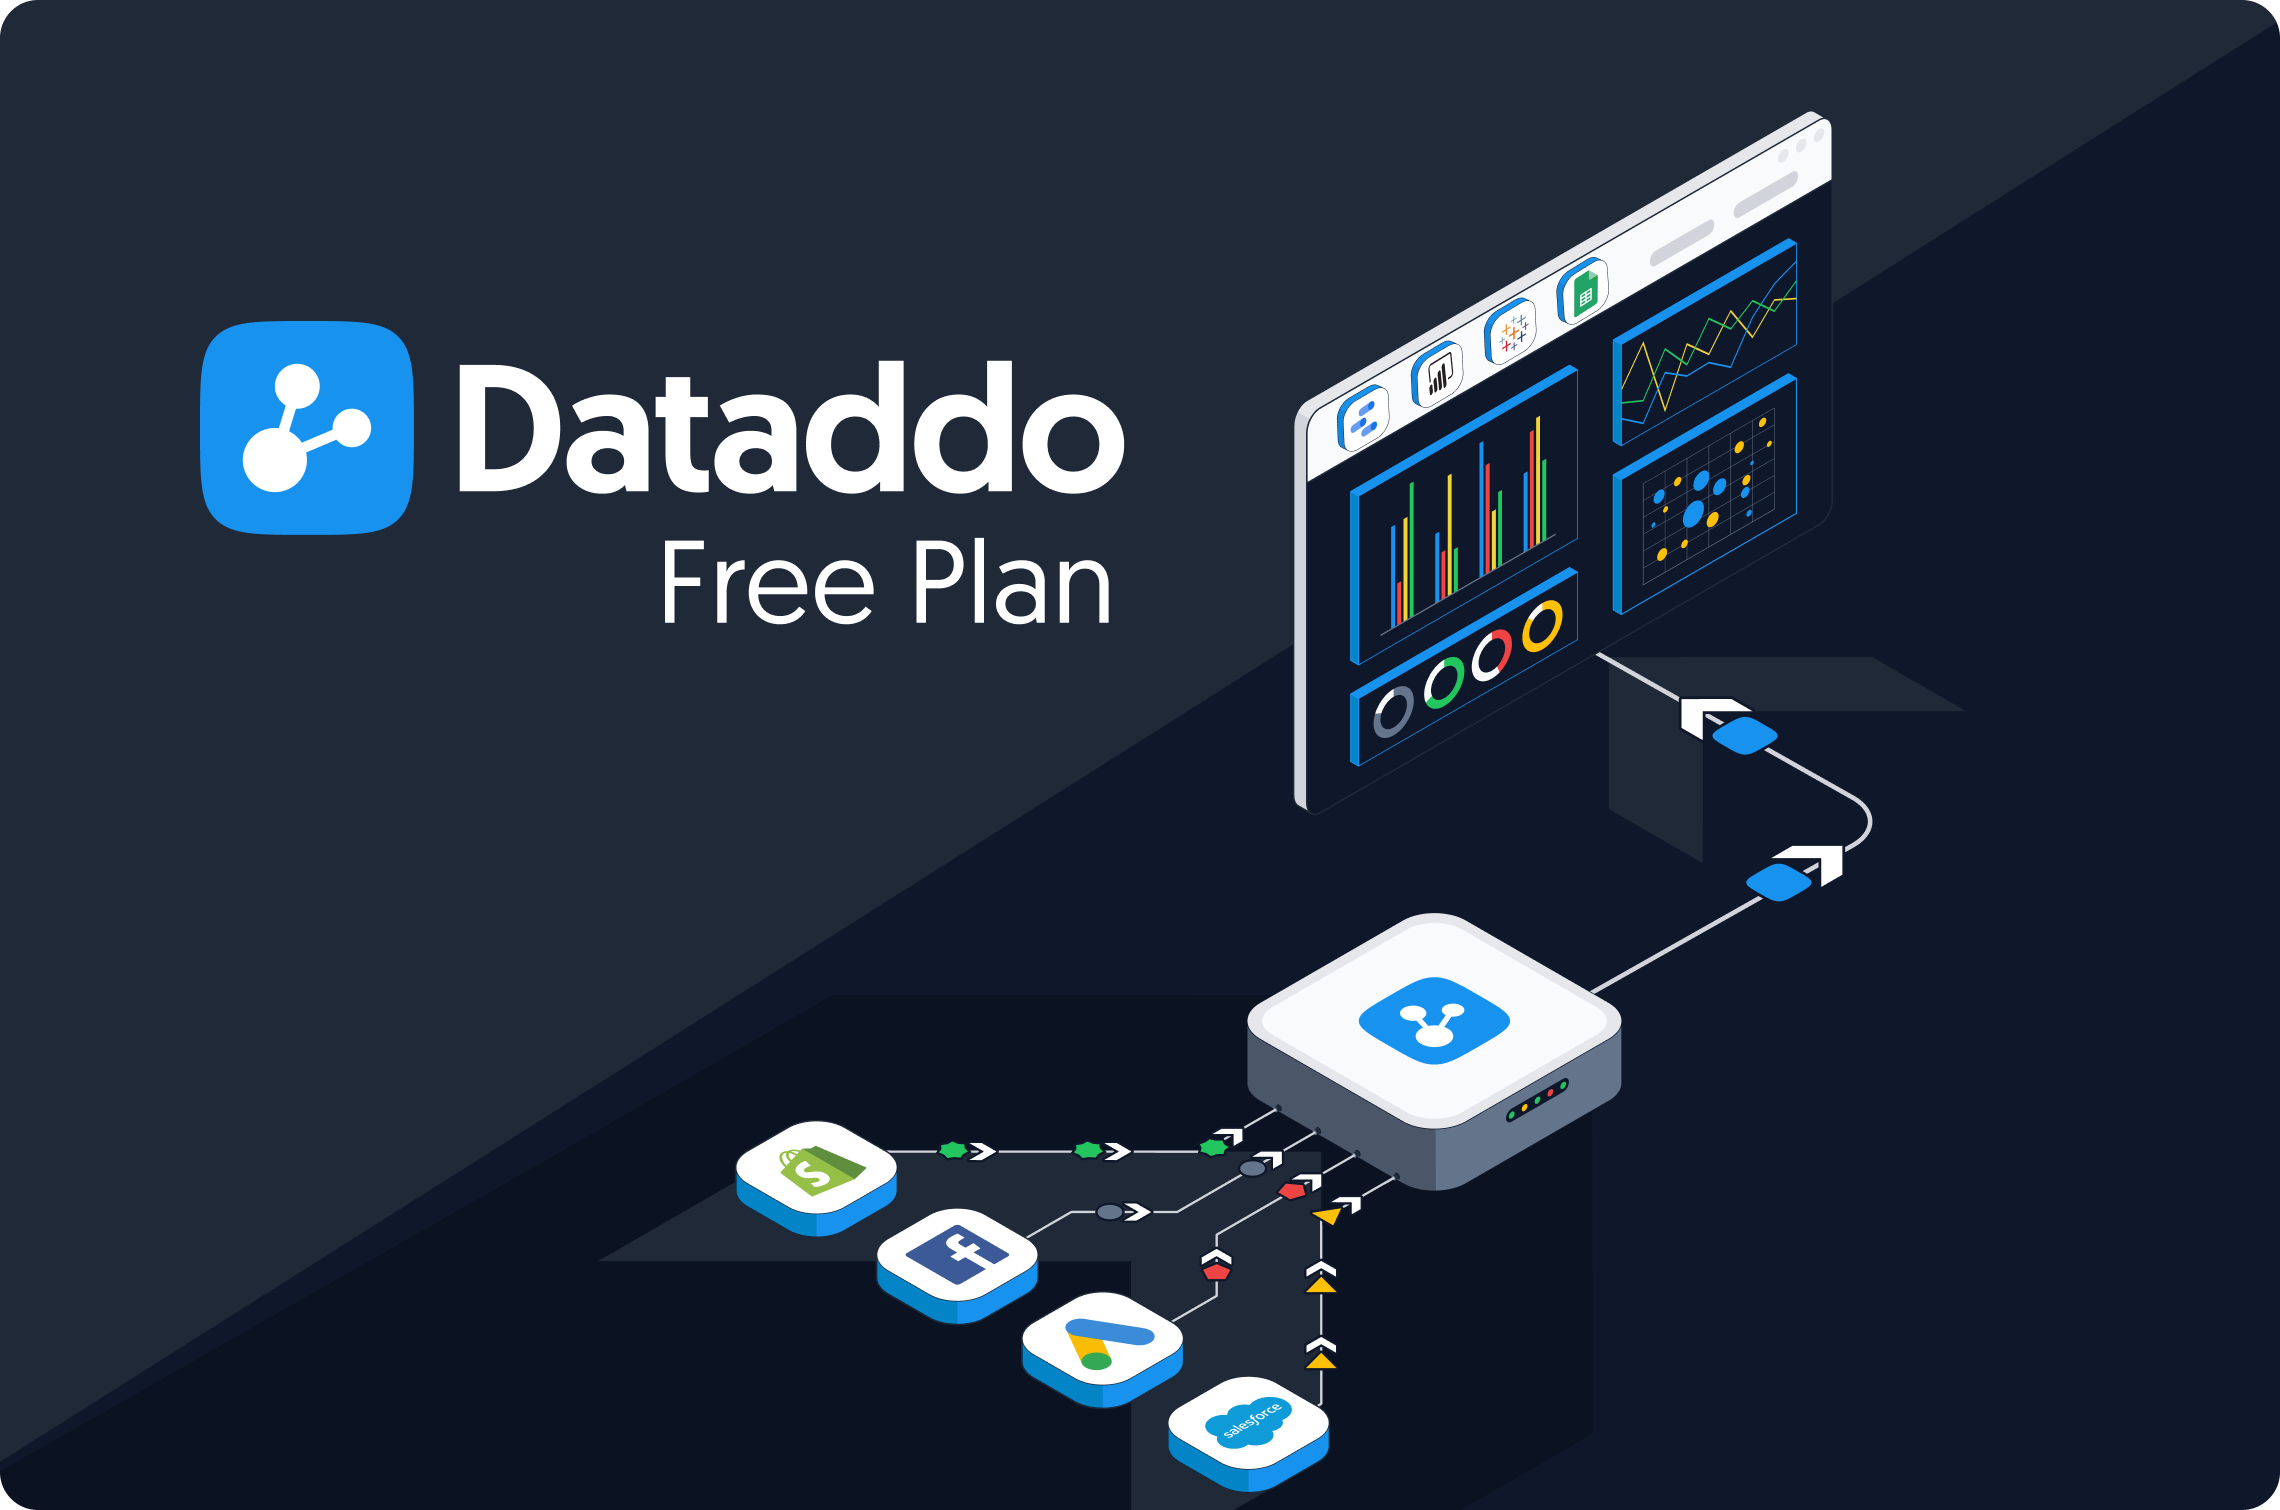 Free Data Integration Forever with Dataddo